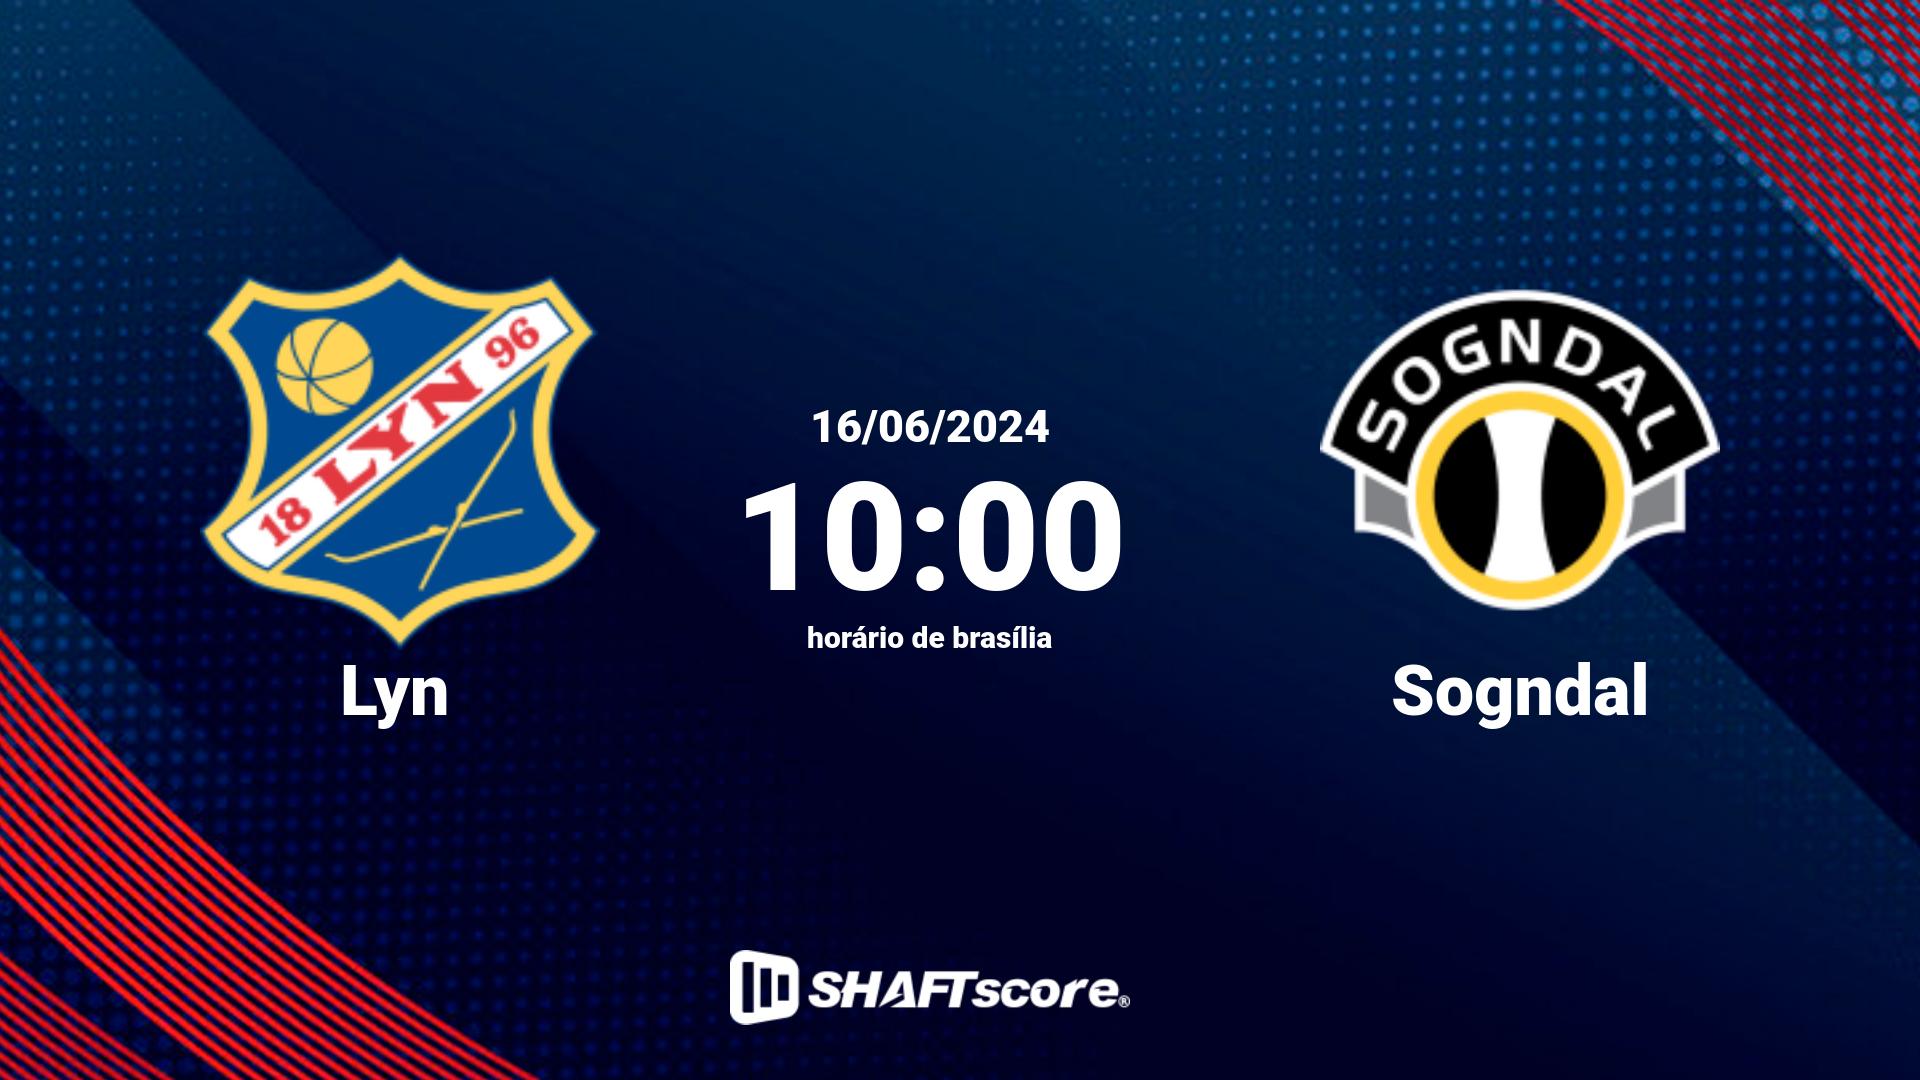 Estatísticas do jogo Lyn vs Sogndal 16.06 10:00